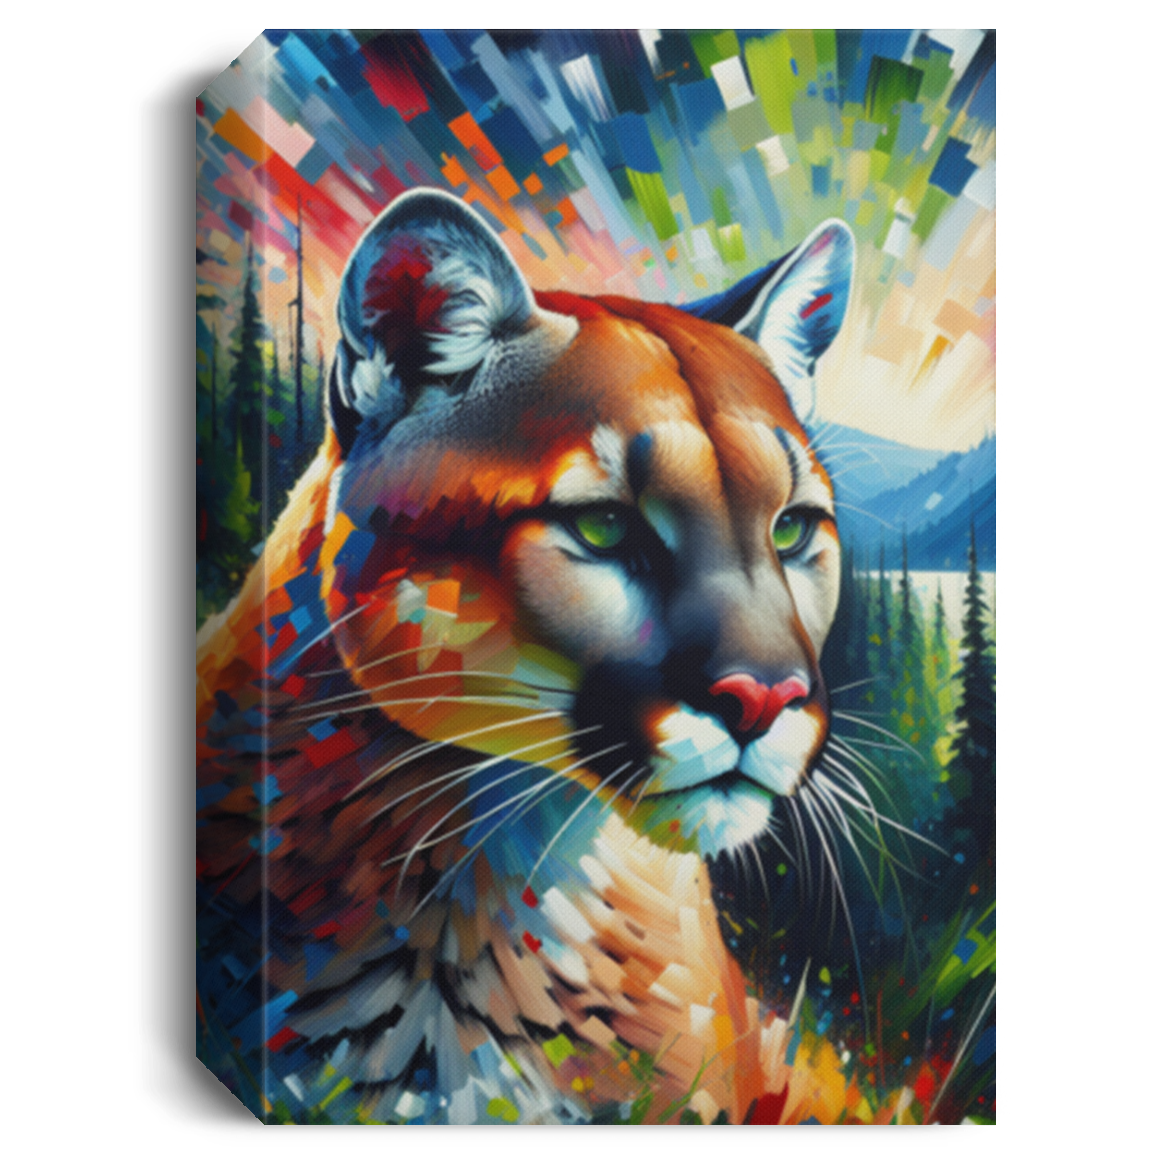 Lake Crescent Cougar - Canvas Art Prints